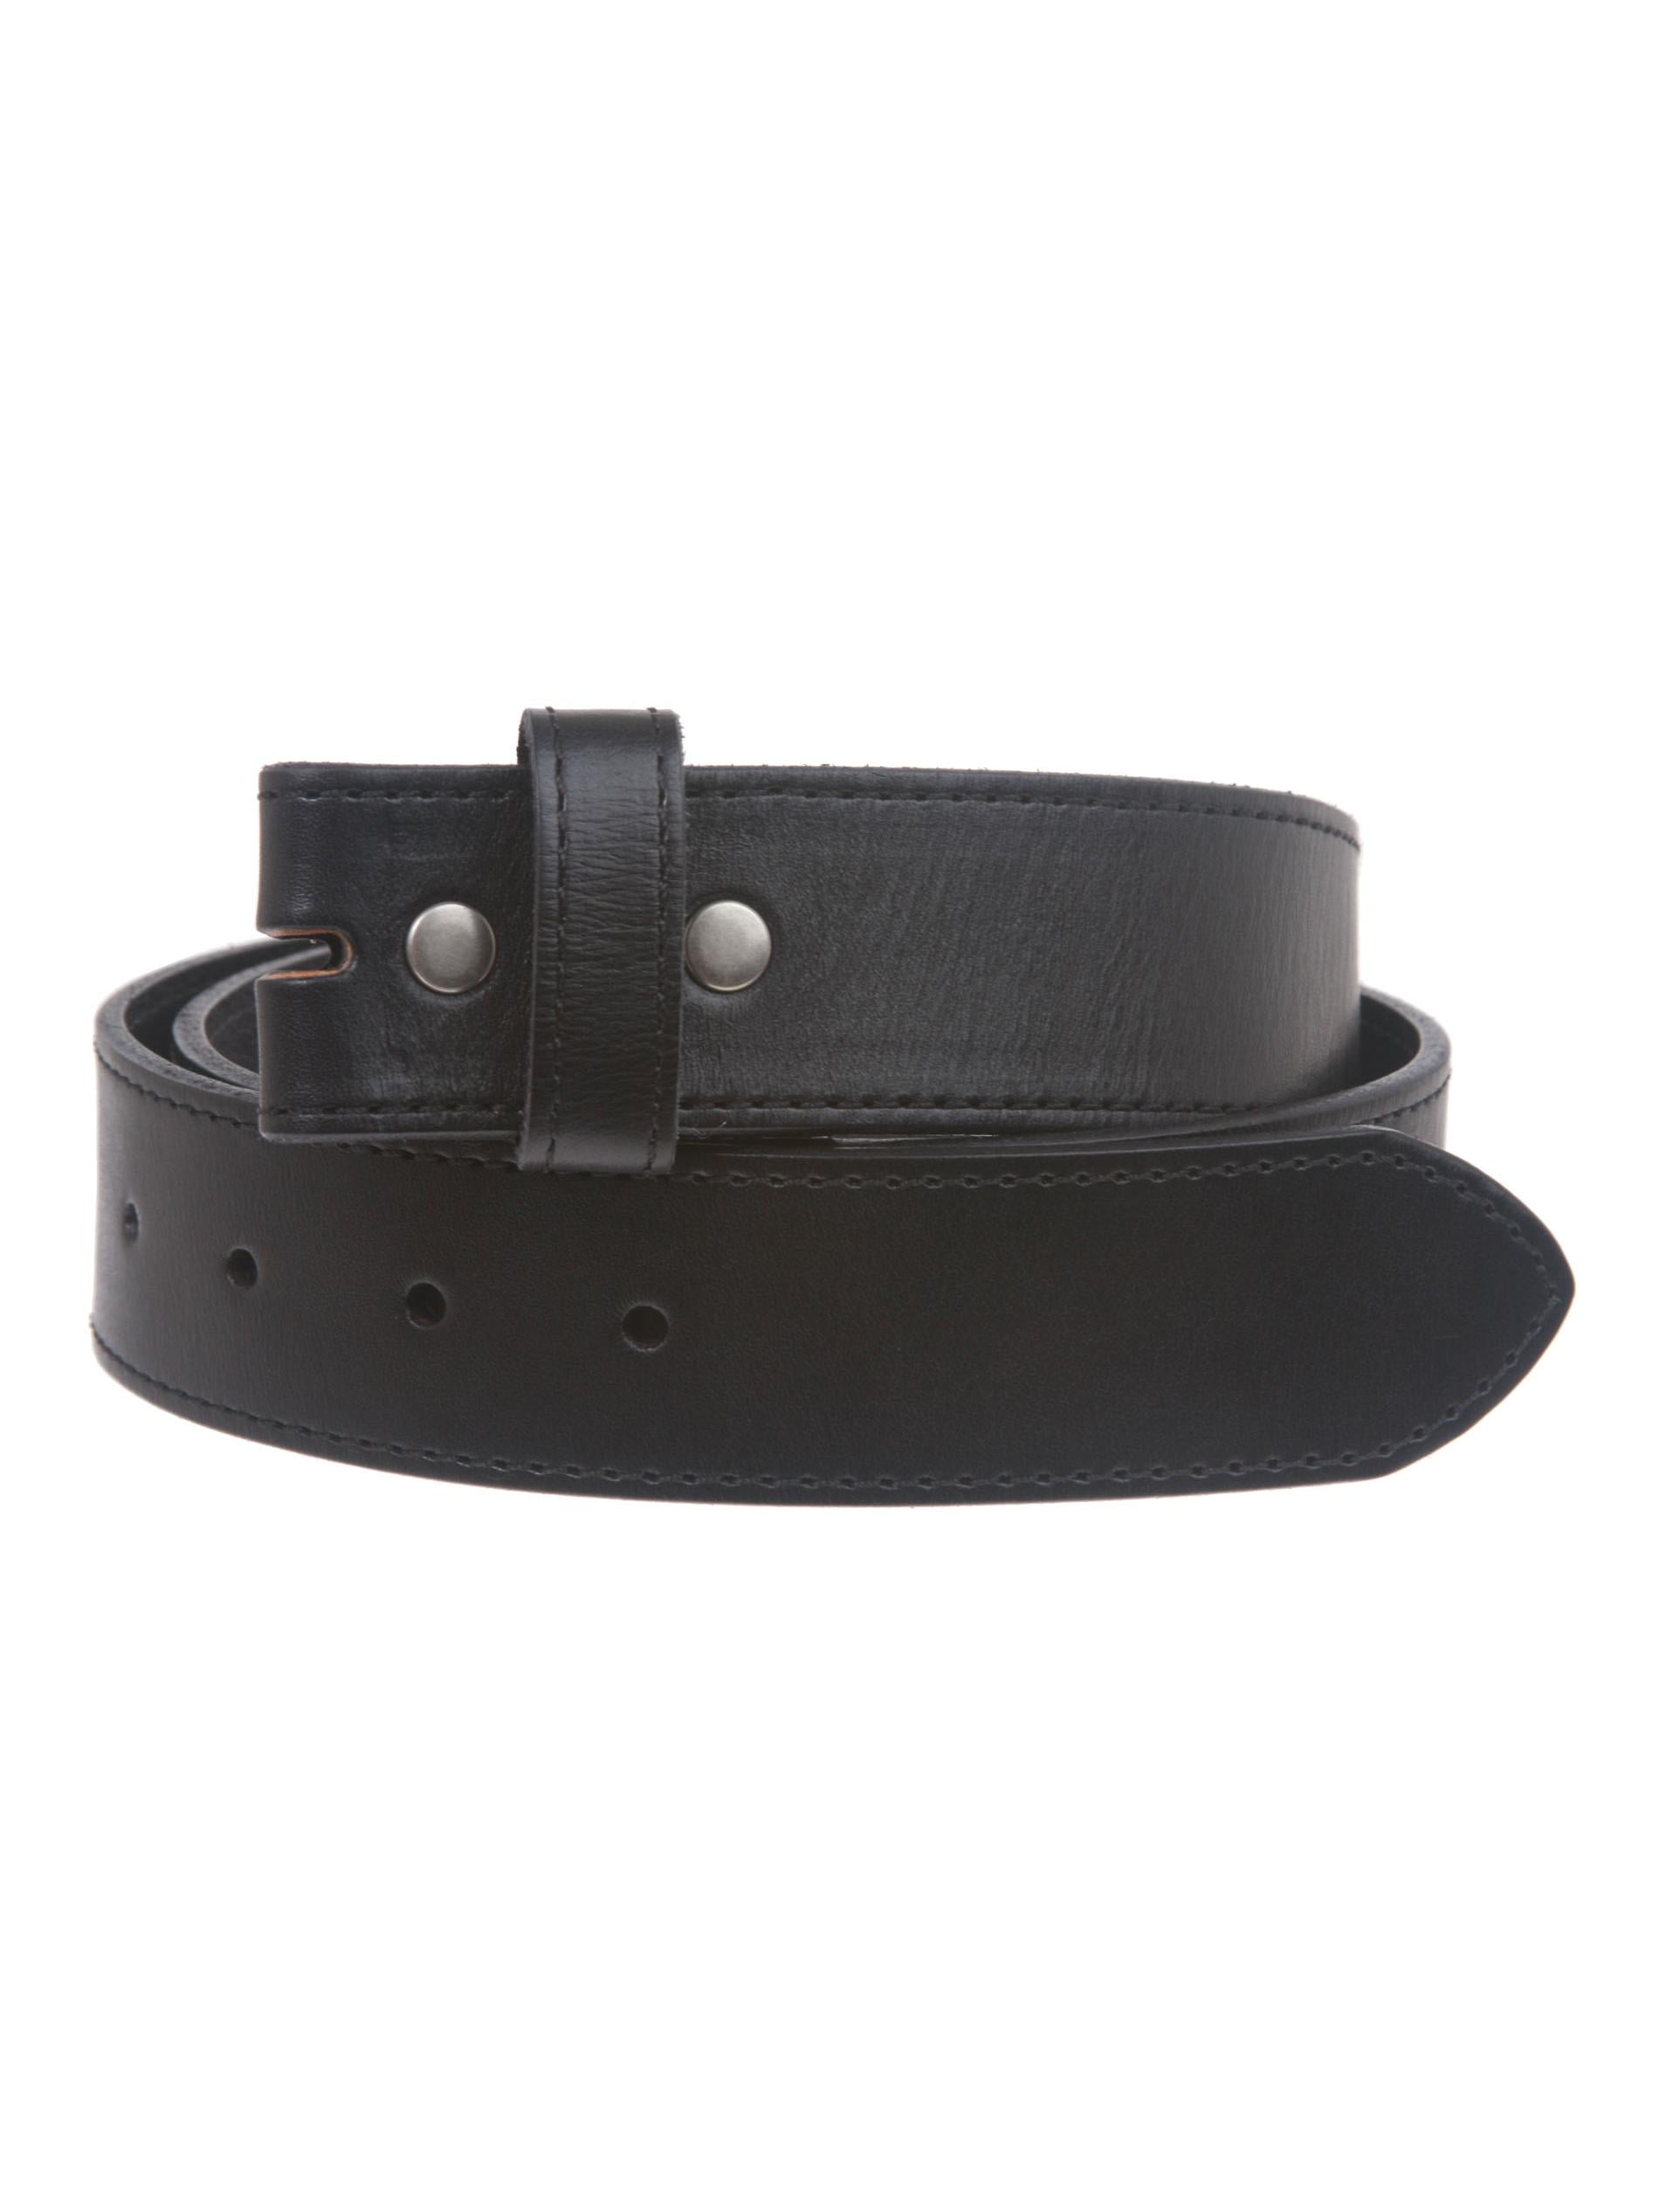 Strap / Snap On Buckle 36 Inch Unisex. Black Top Grain American Leather Belt